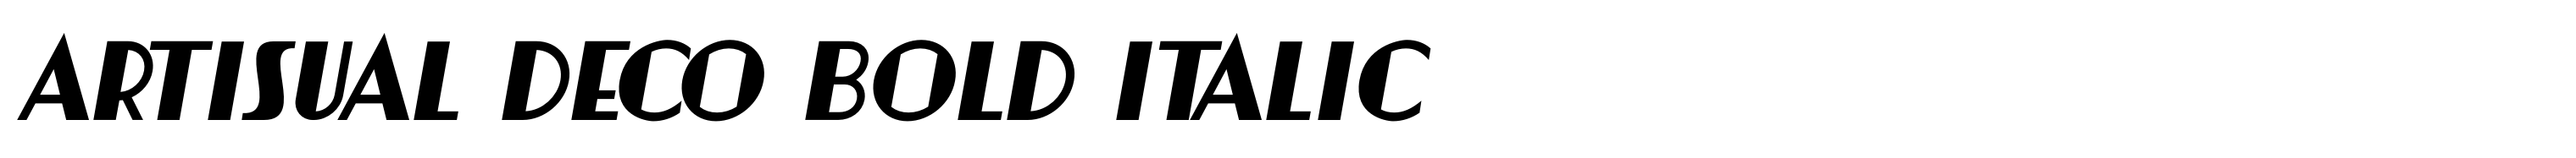 Artisual Deco Bold Italic